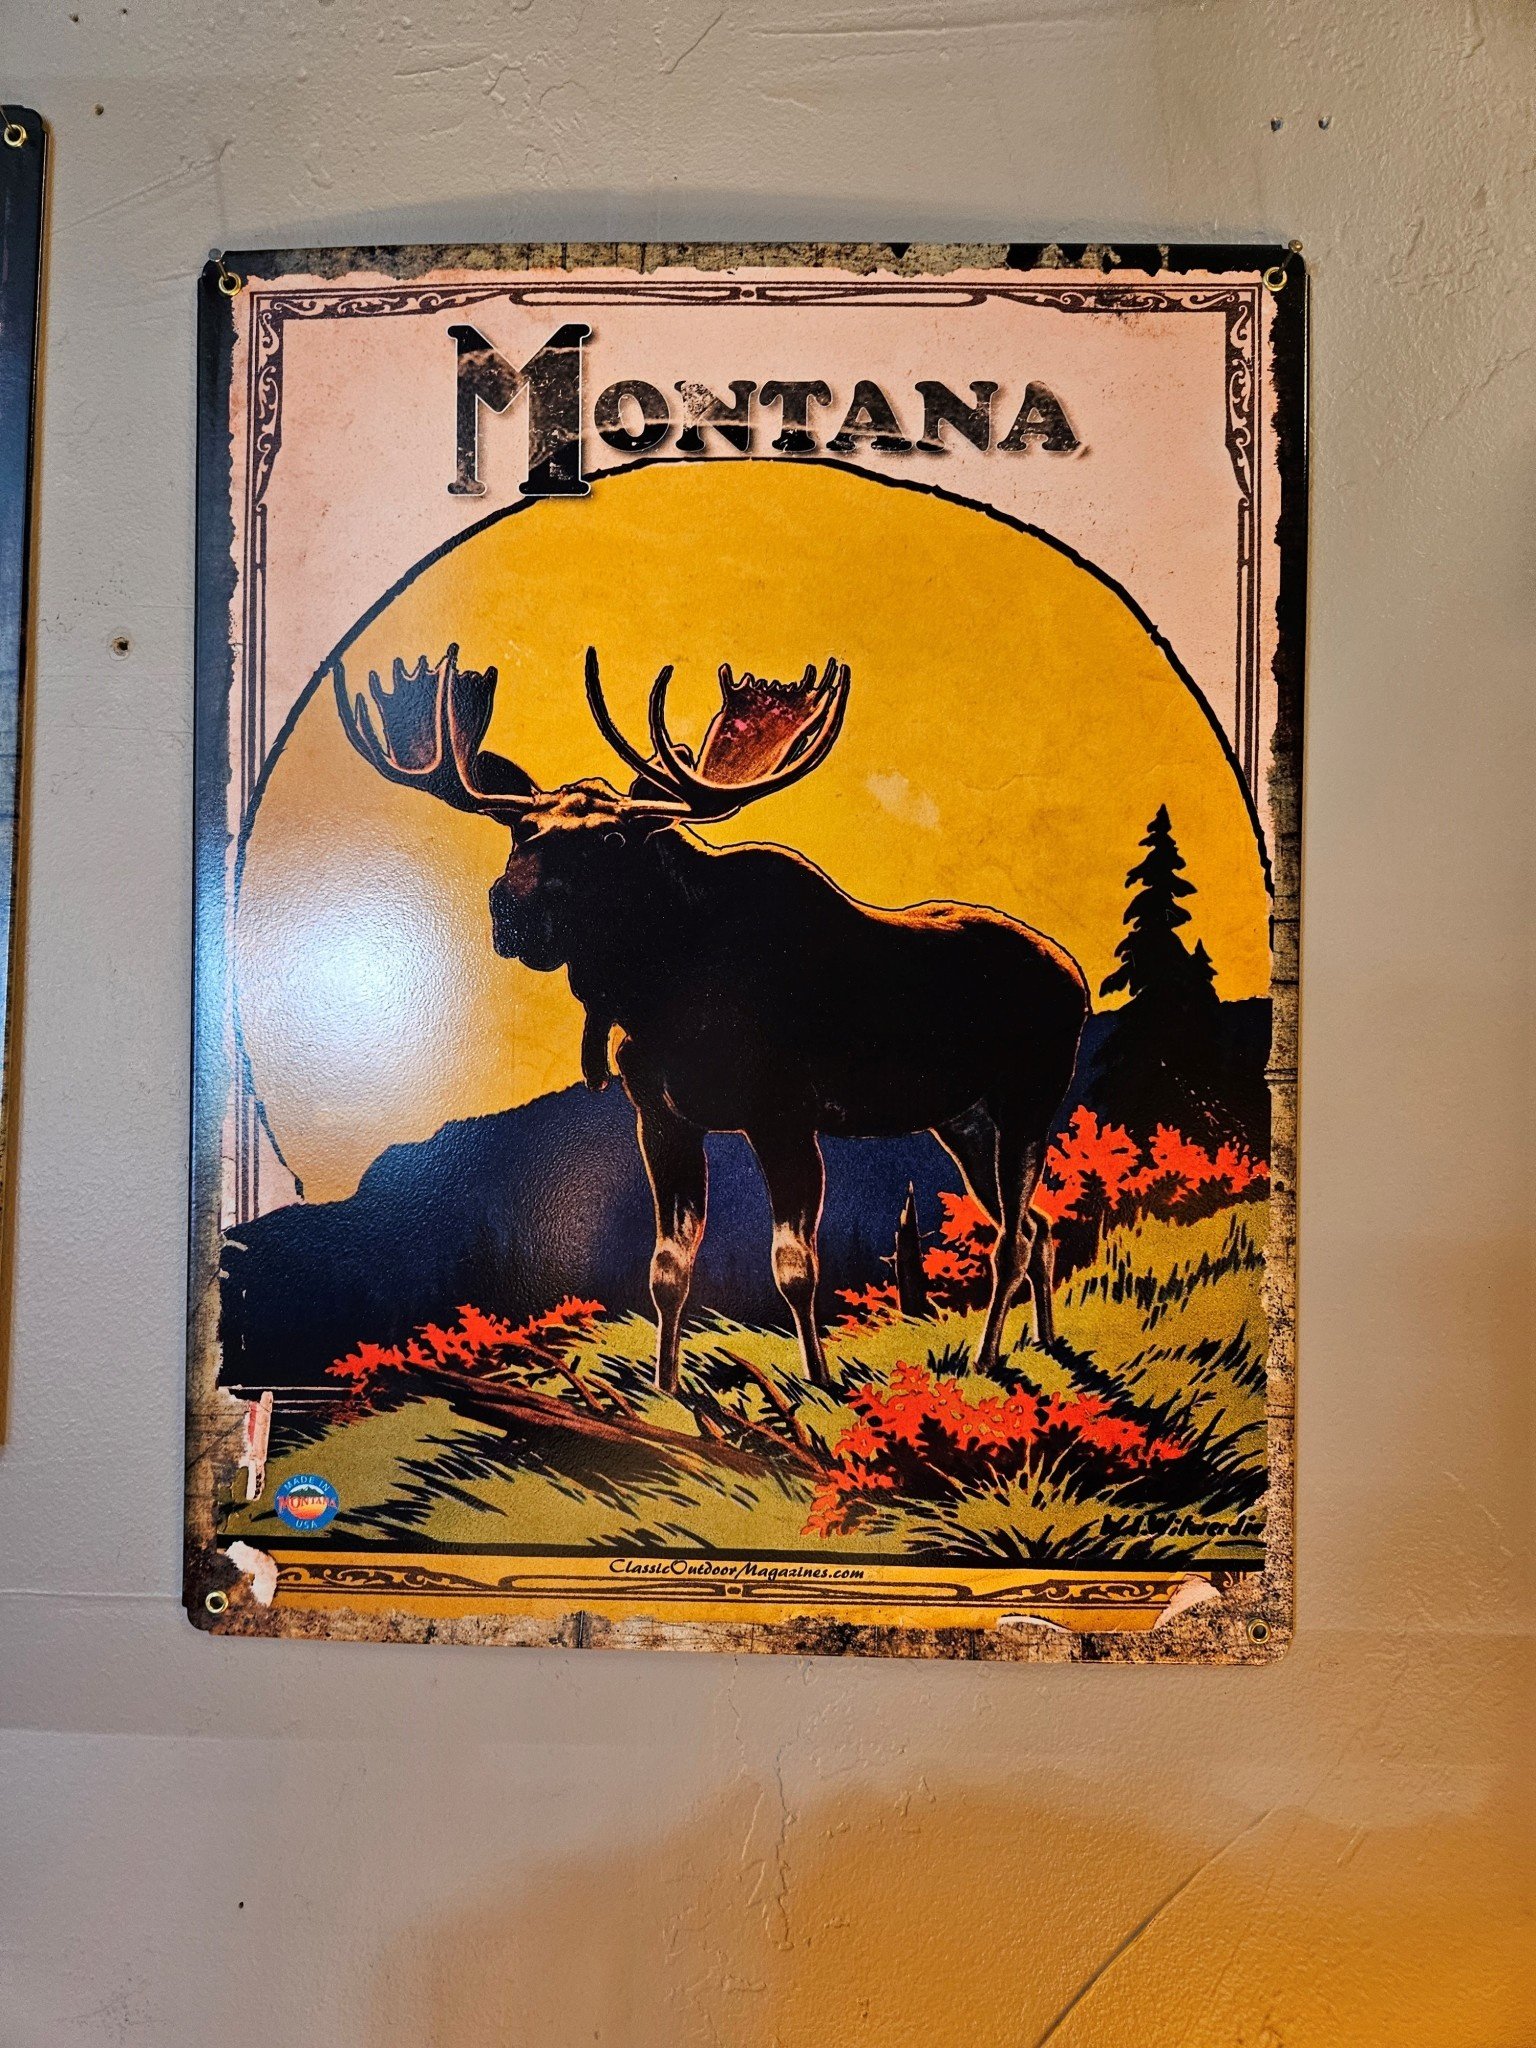 Classic Outdoor Magazines #12 Montana Moose 12x15 Metal Sign